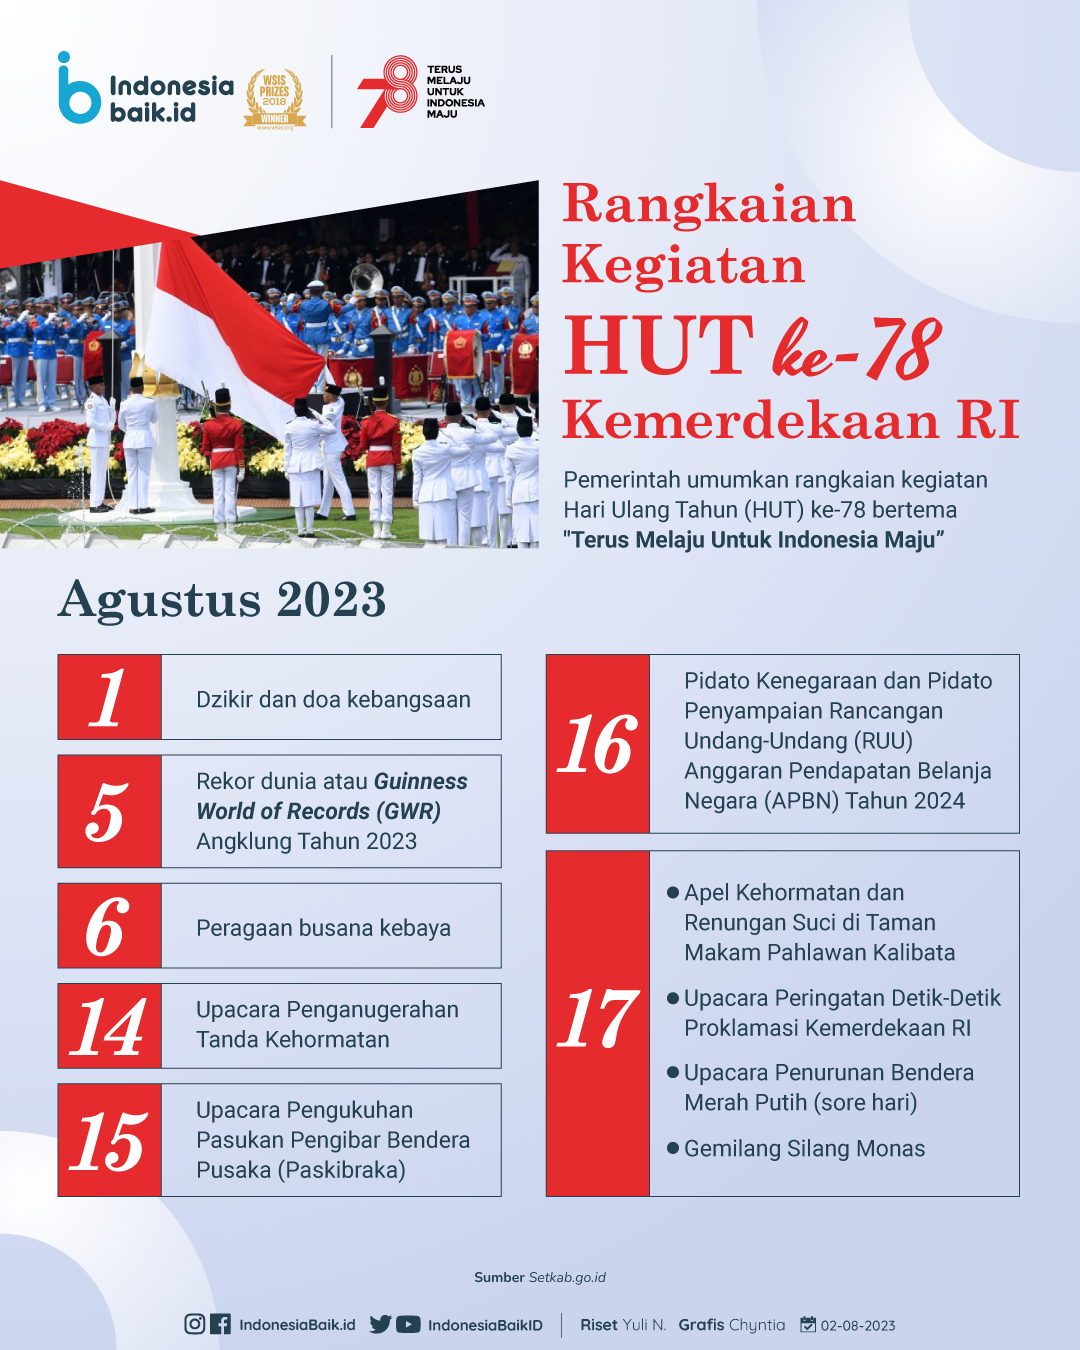 Rangkaian kegiatan HUT ke-78 Republik Indonesia